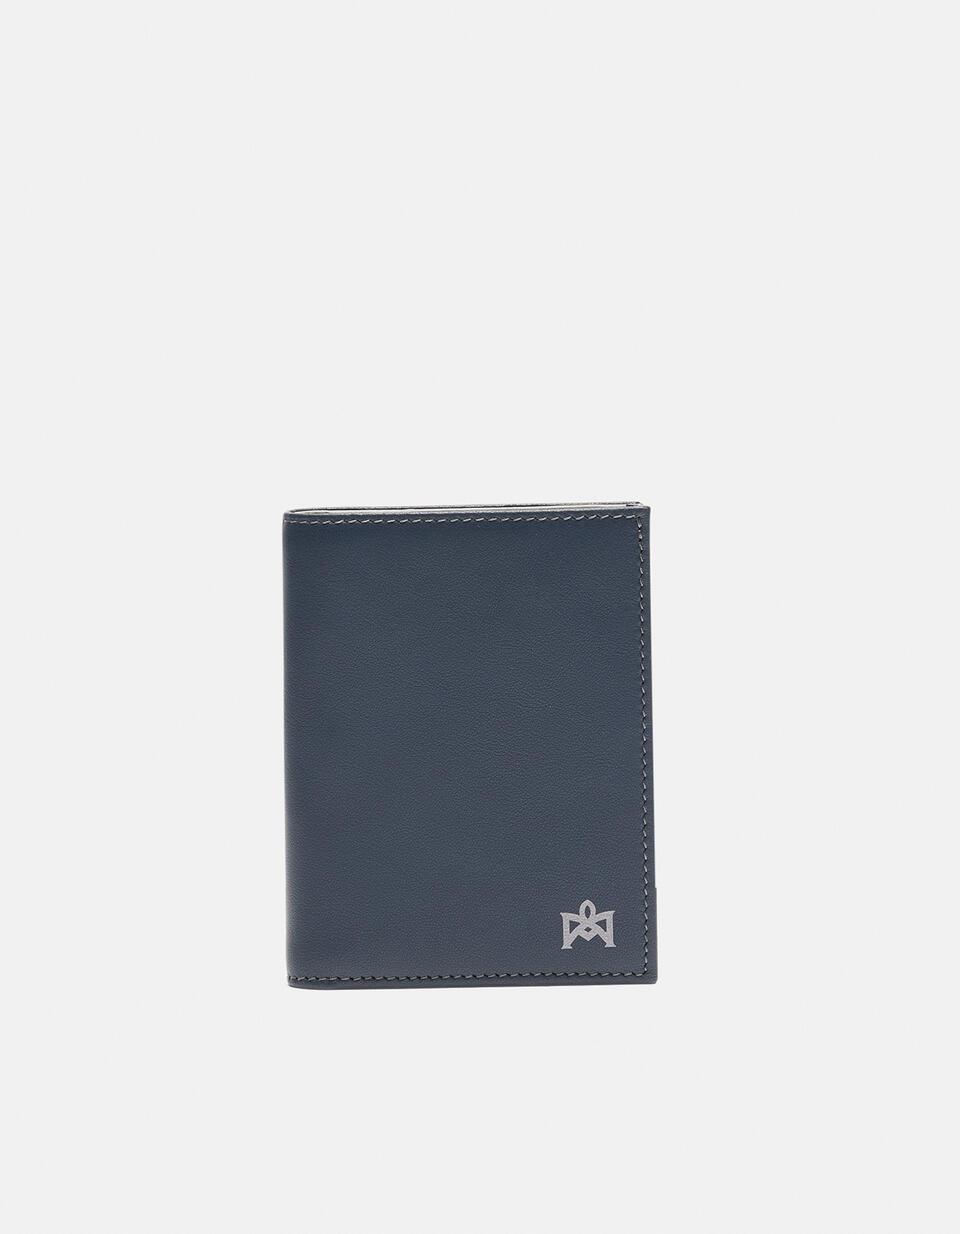 Vertical wallet Bluetaupe  - Women's Wallets - Men's Wallets - Wallets - Cuoieria Fiorentina